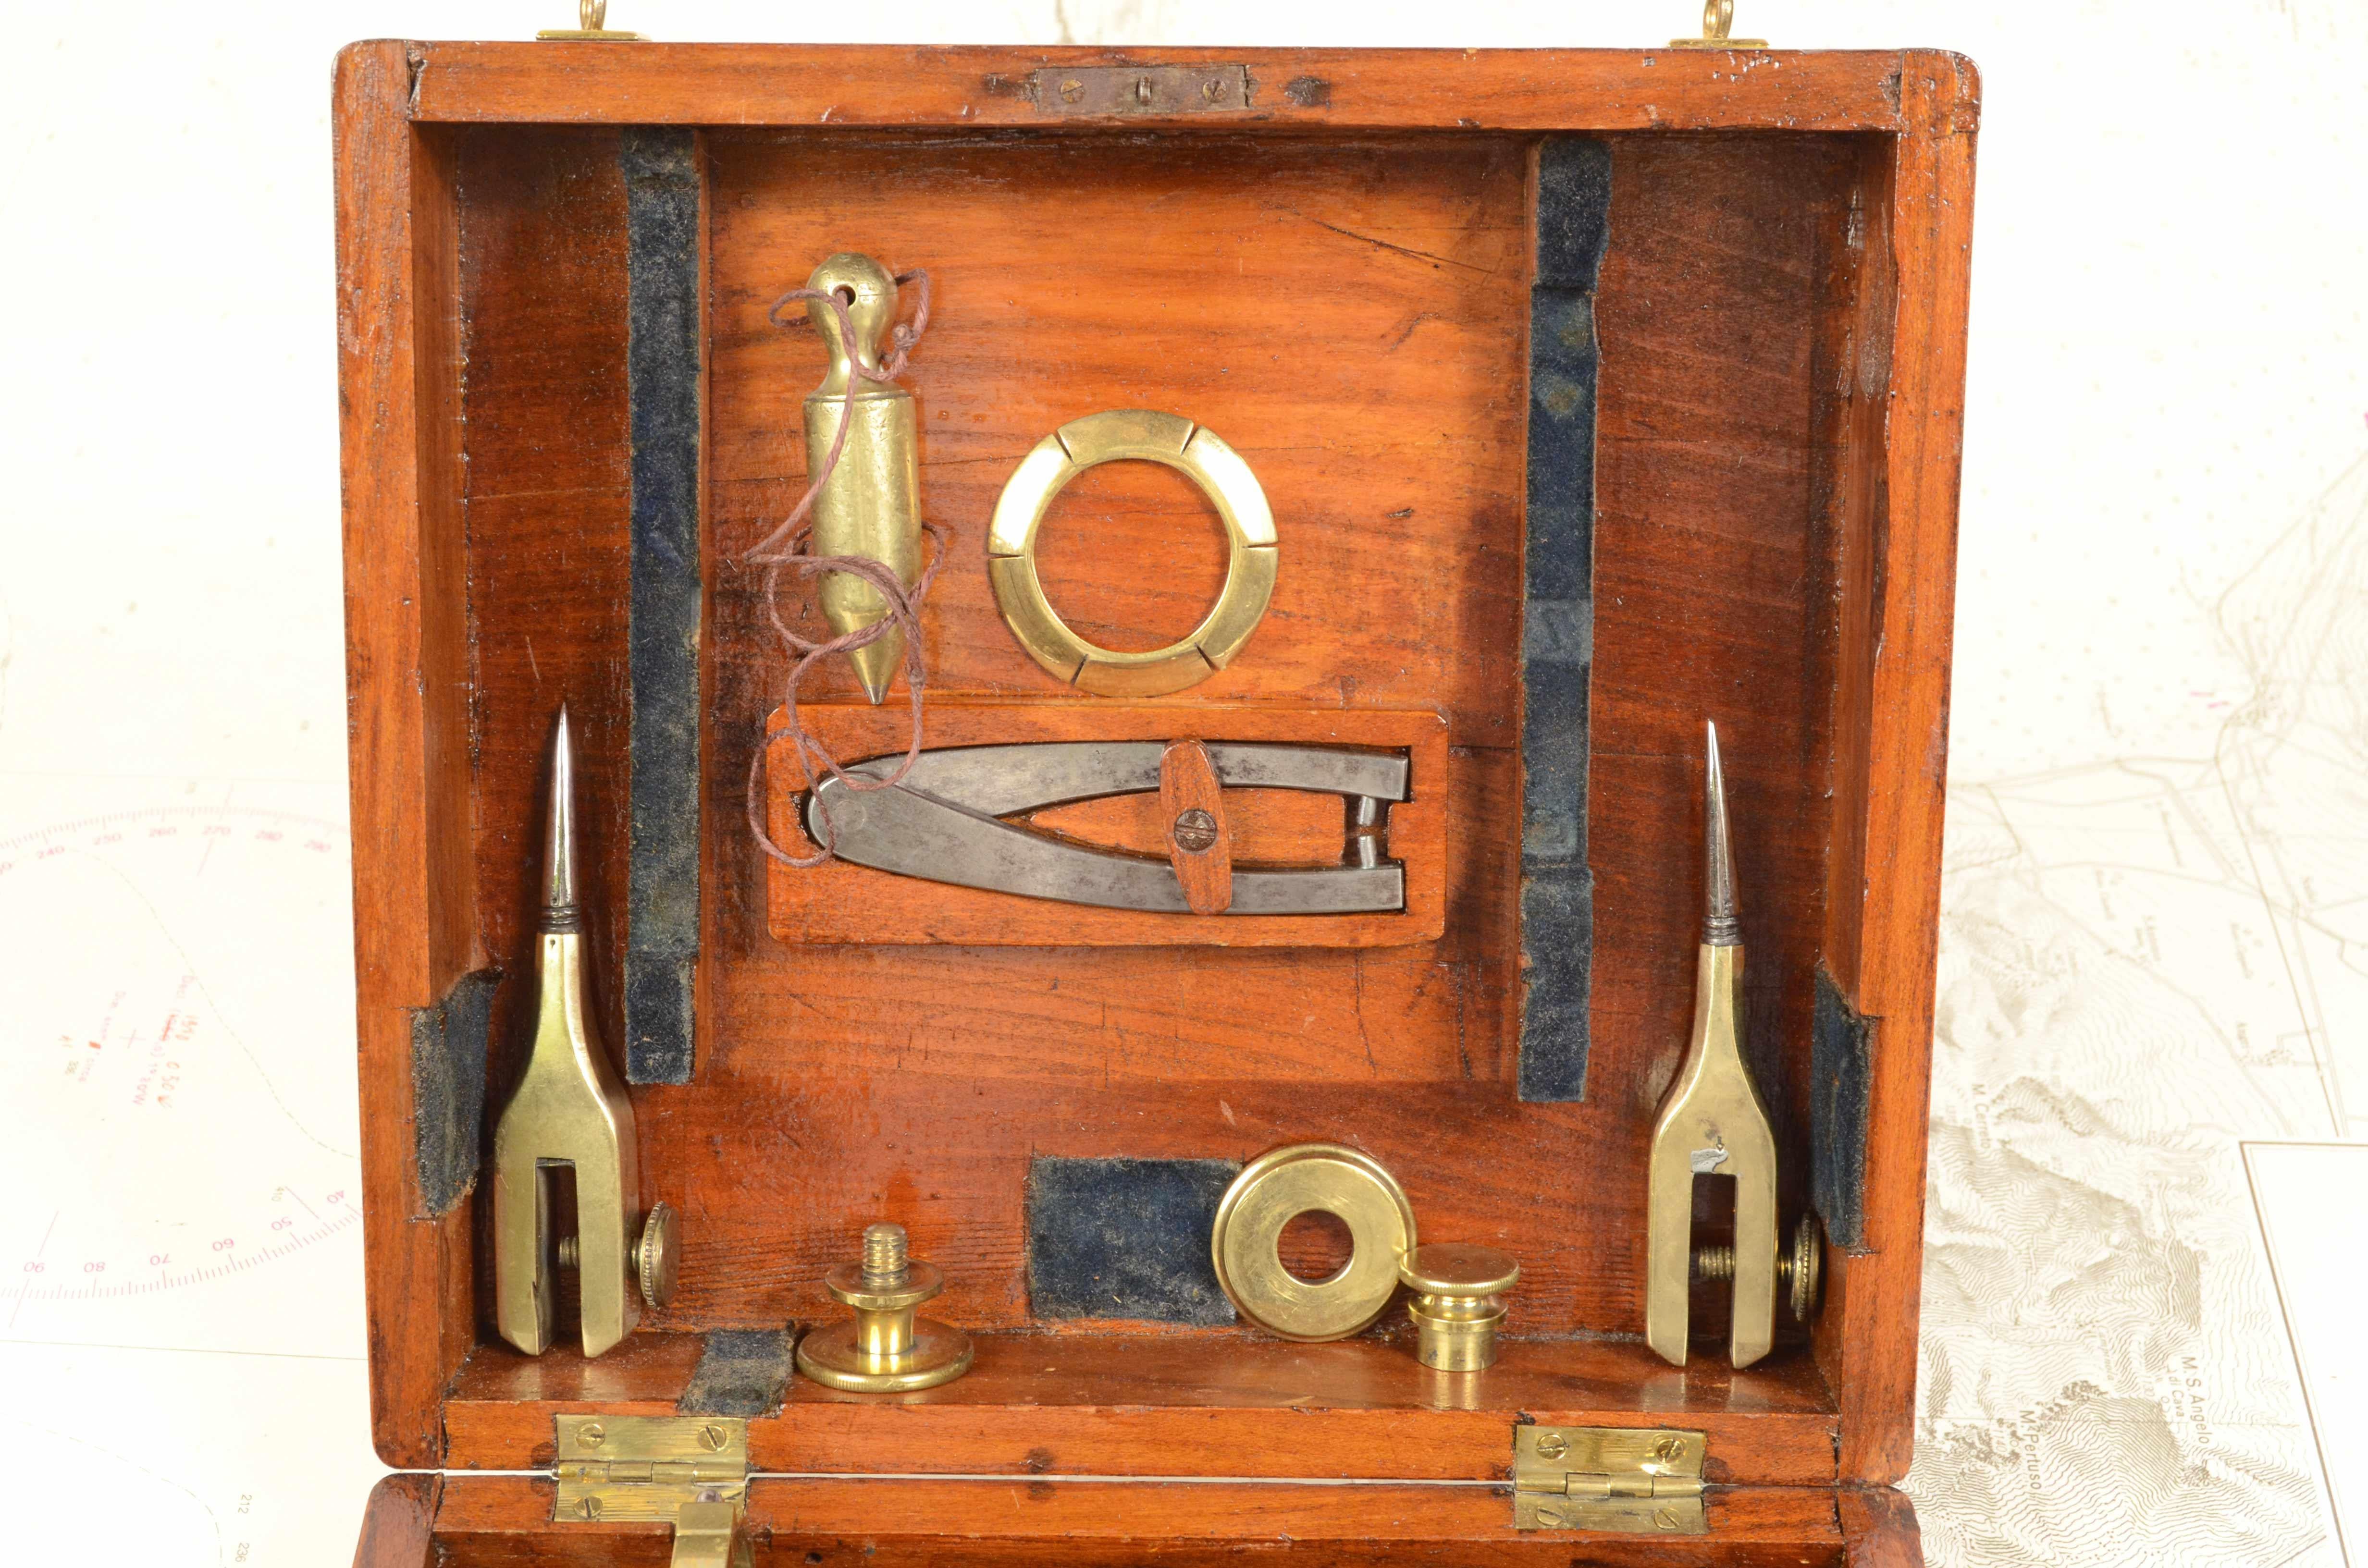 1870s Brass Clisigonimeter F. Miller Innsbruck Surveyor Measurement Instrumemt 15